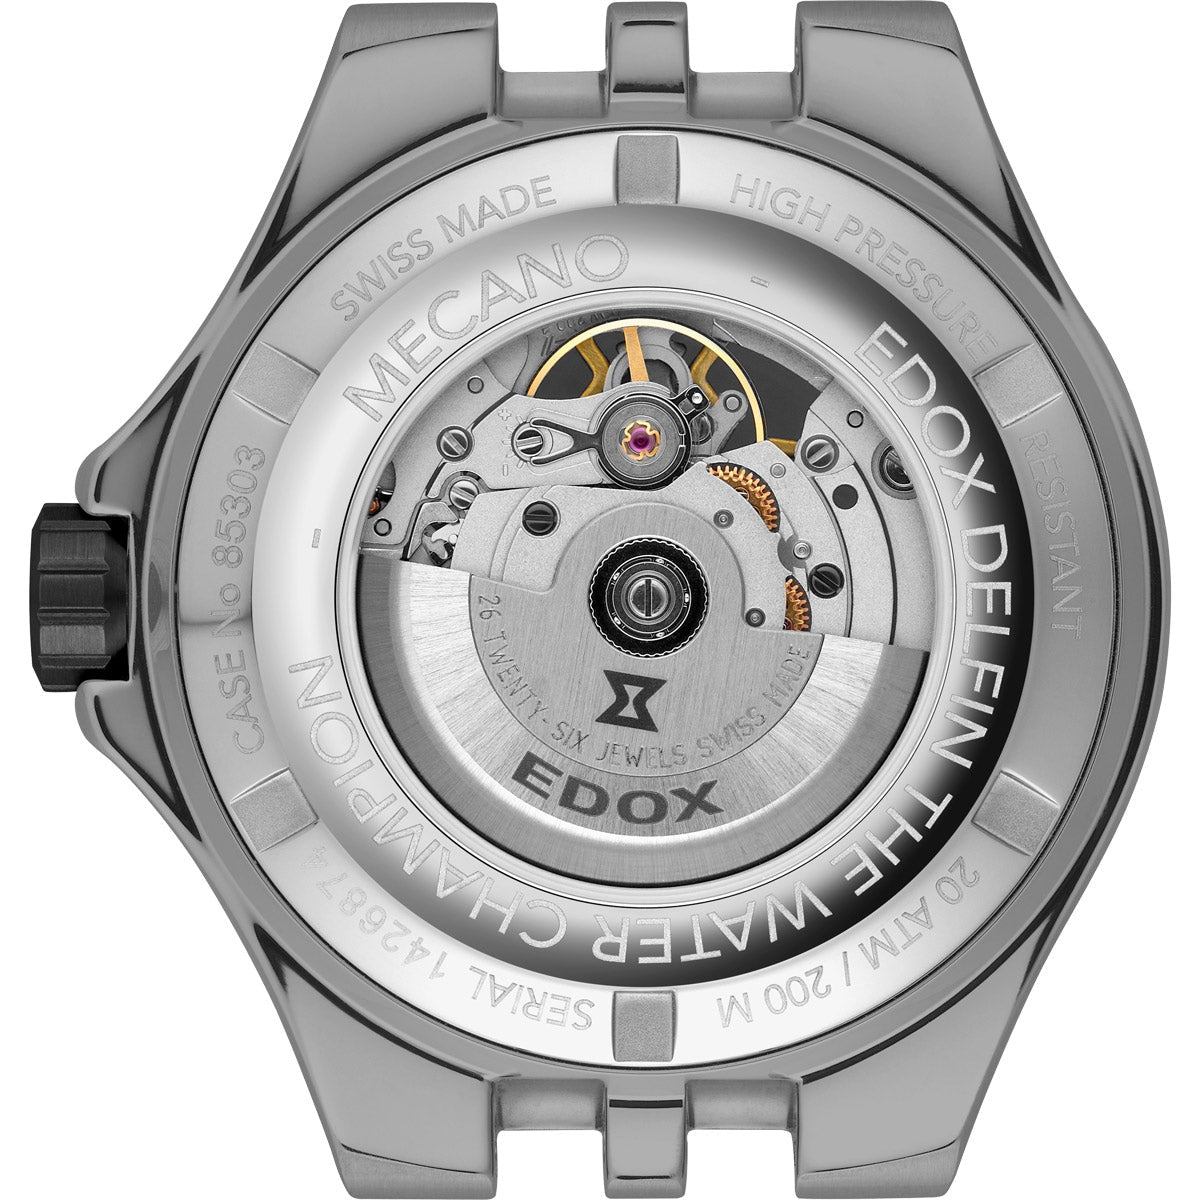 Edox - Delfin Mecano - Watch